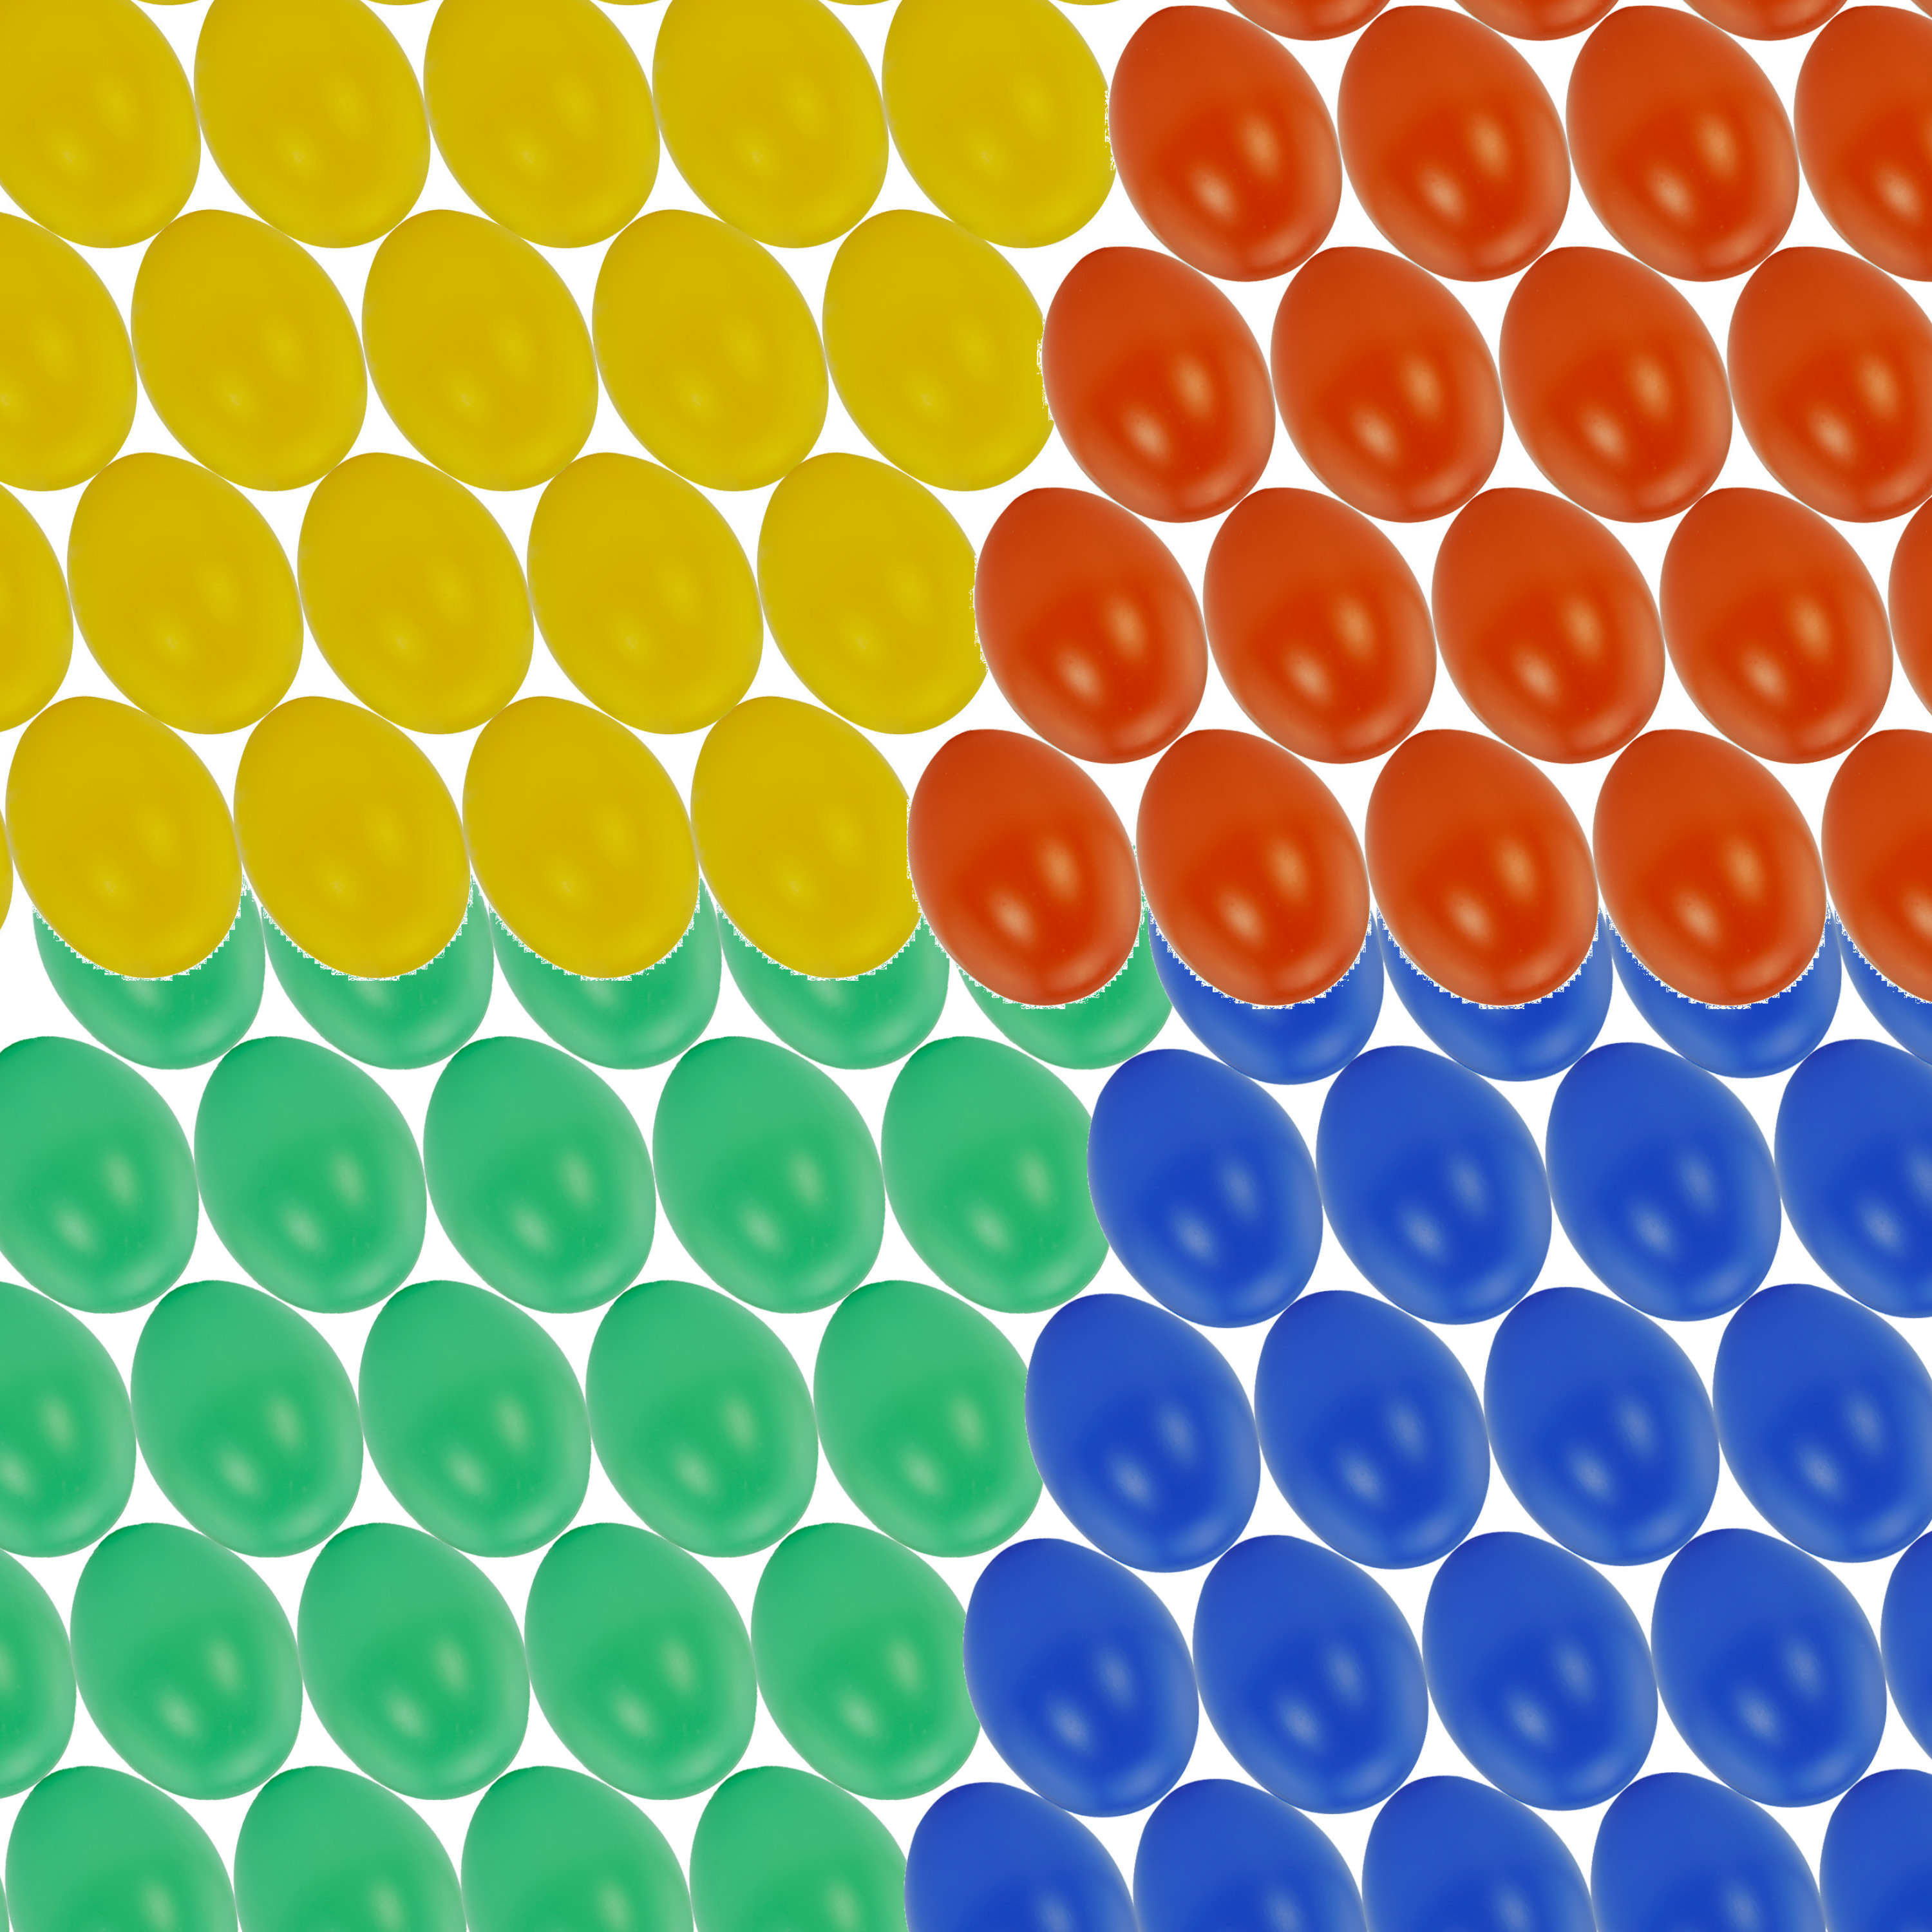 100x stuks multi-color hobby knutselen paaseieren van plastic 4.5 cm -